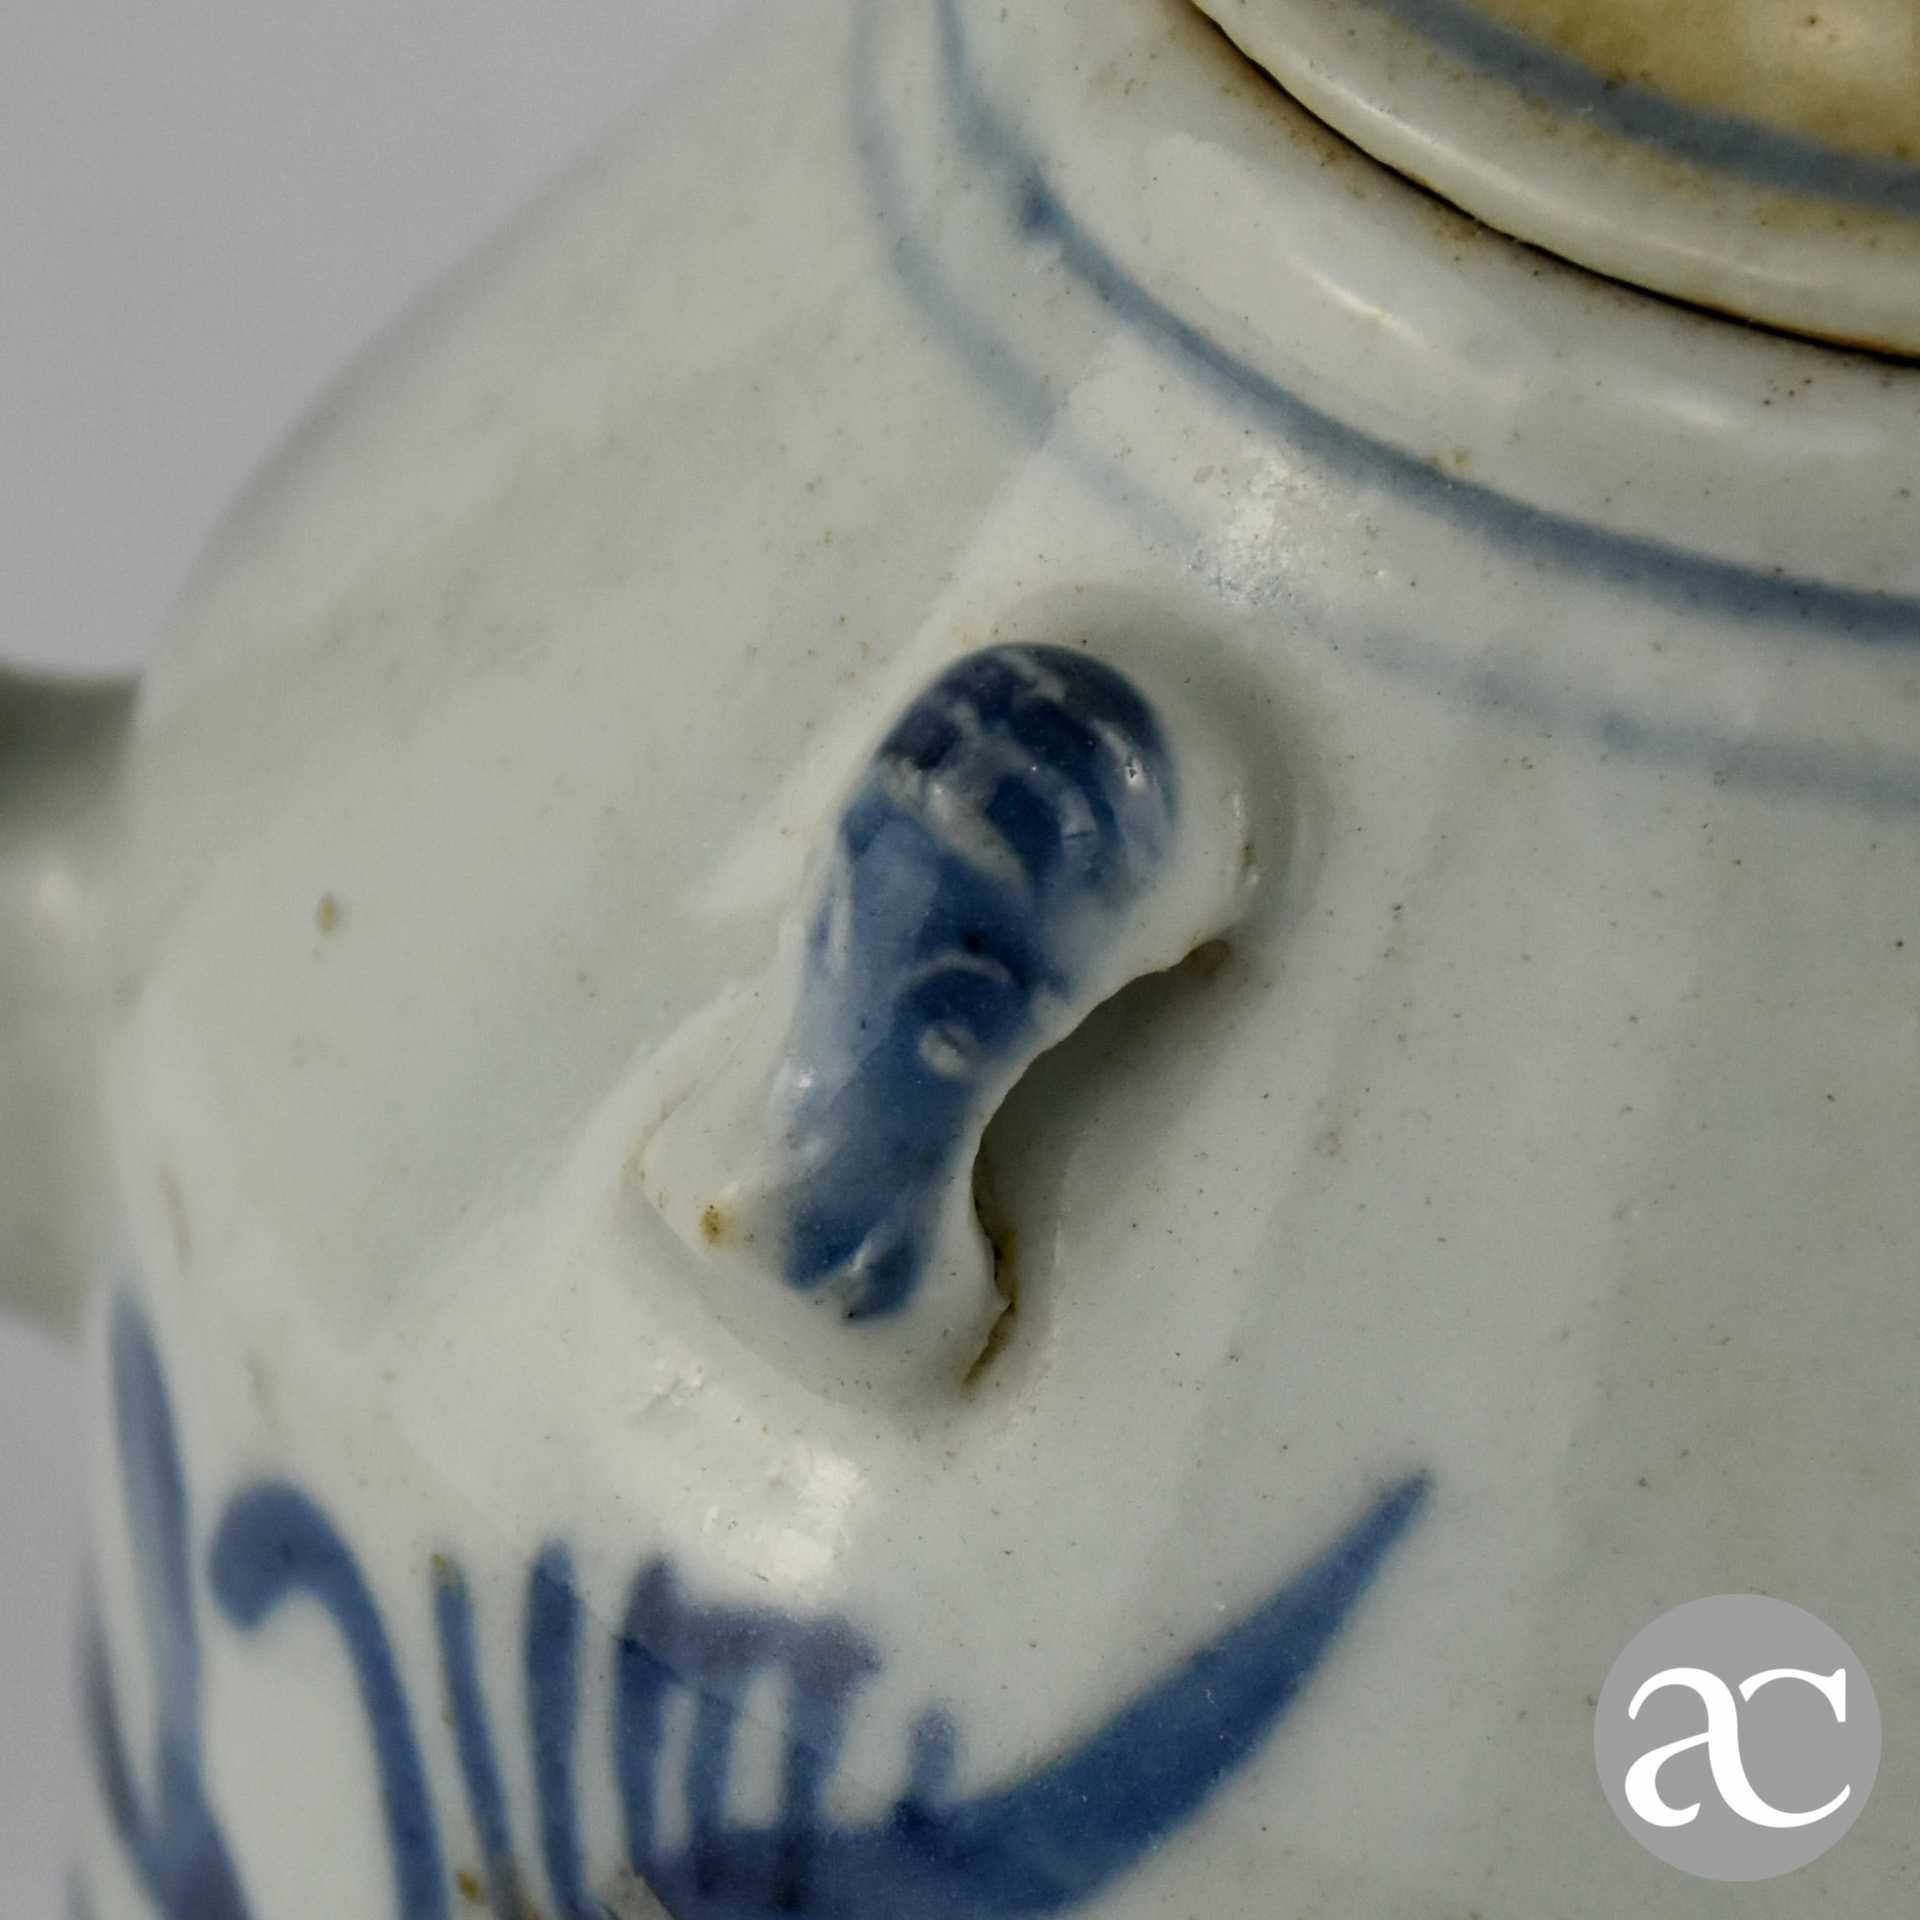 Bule porcelana da China, Azul e Branco, séc. XVIII